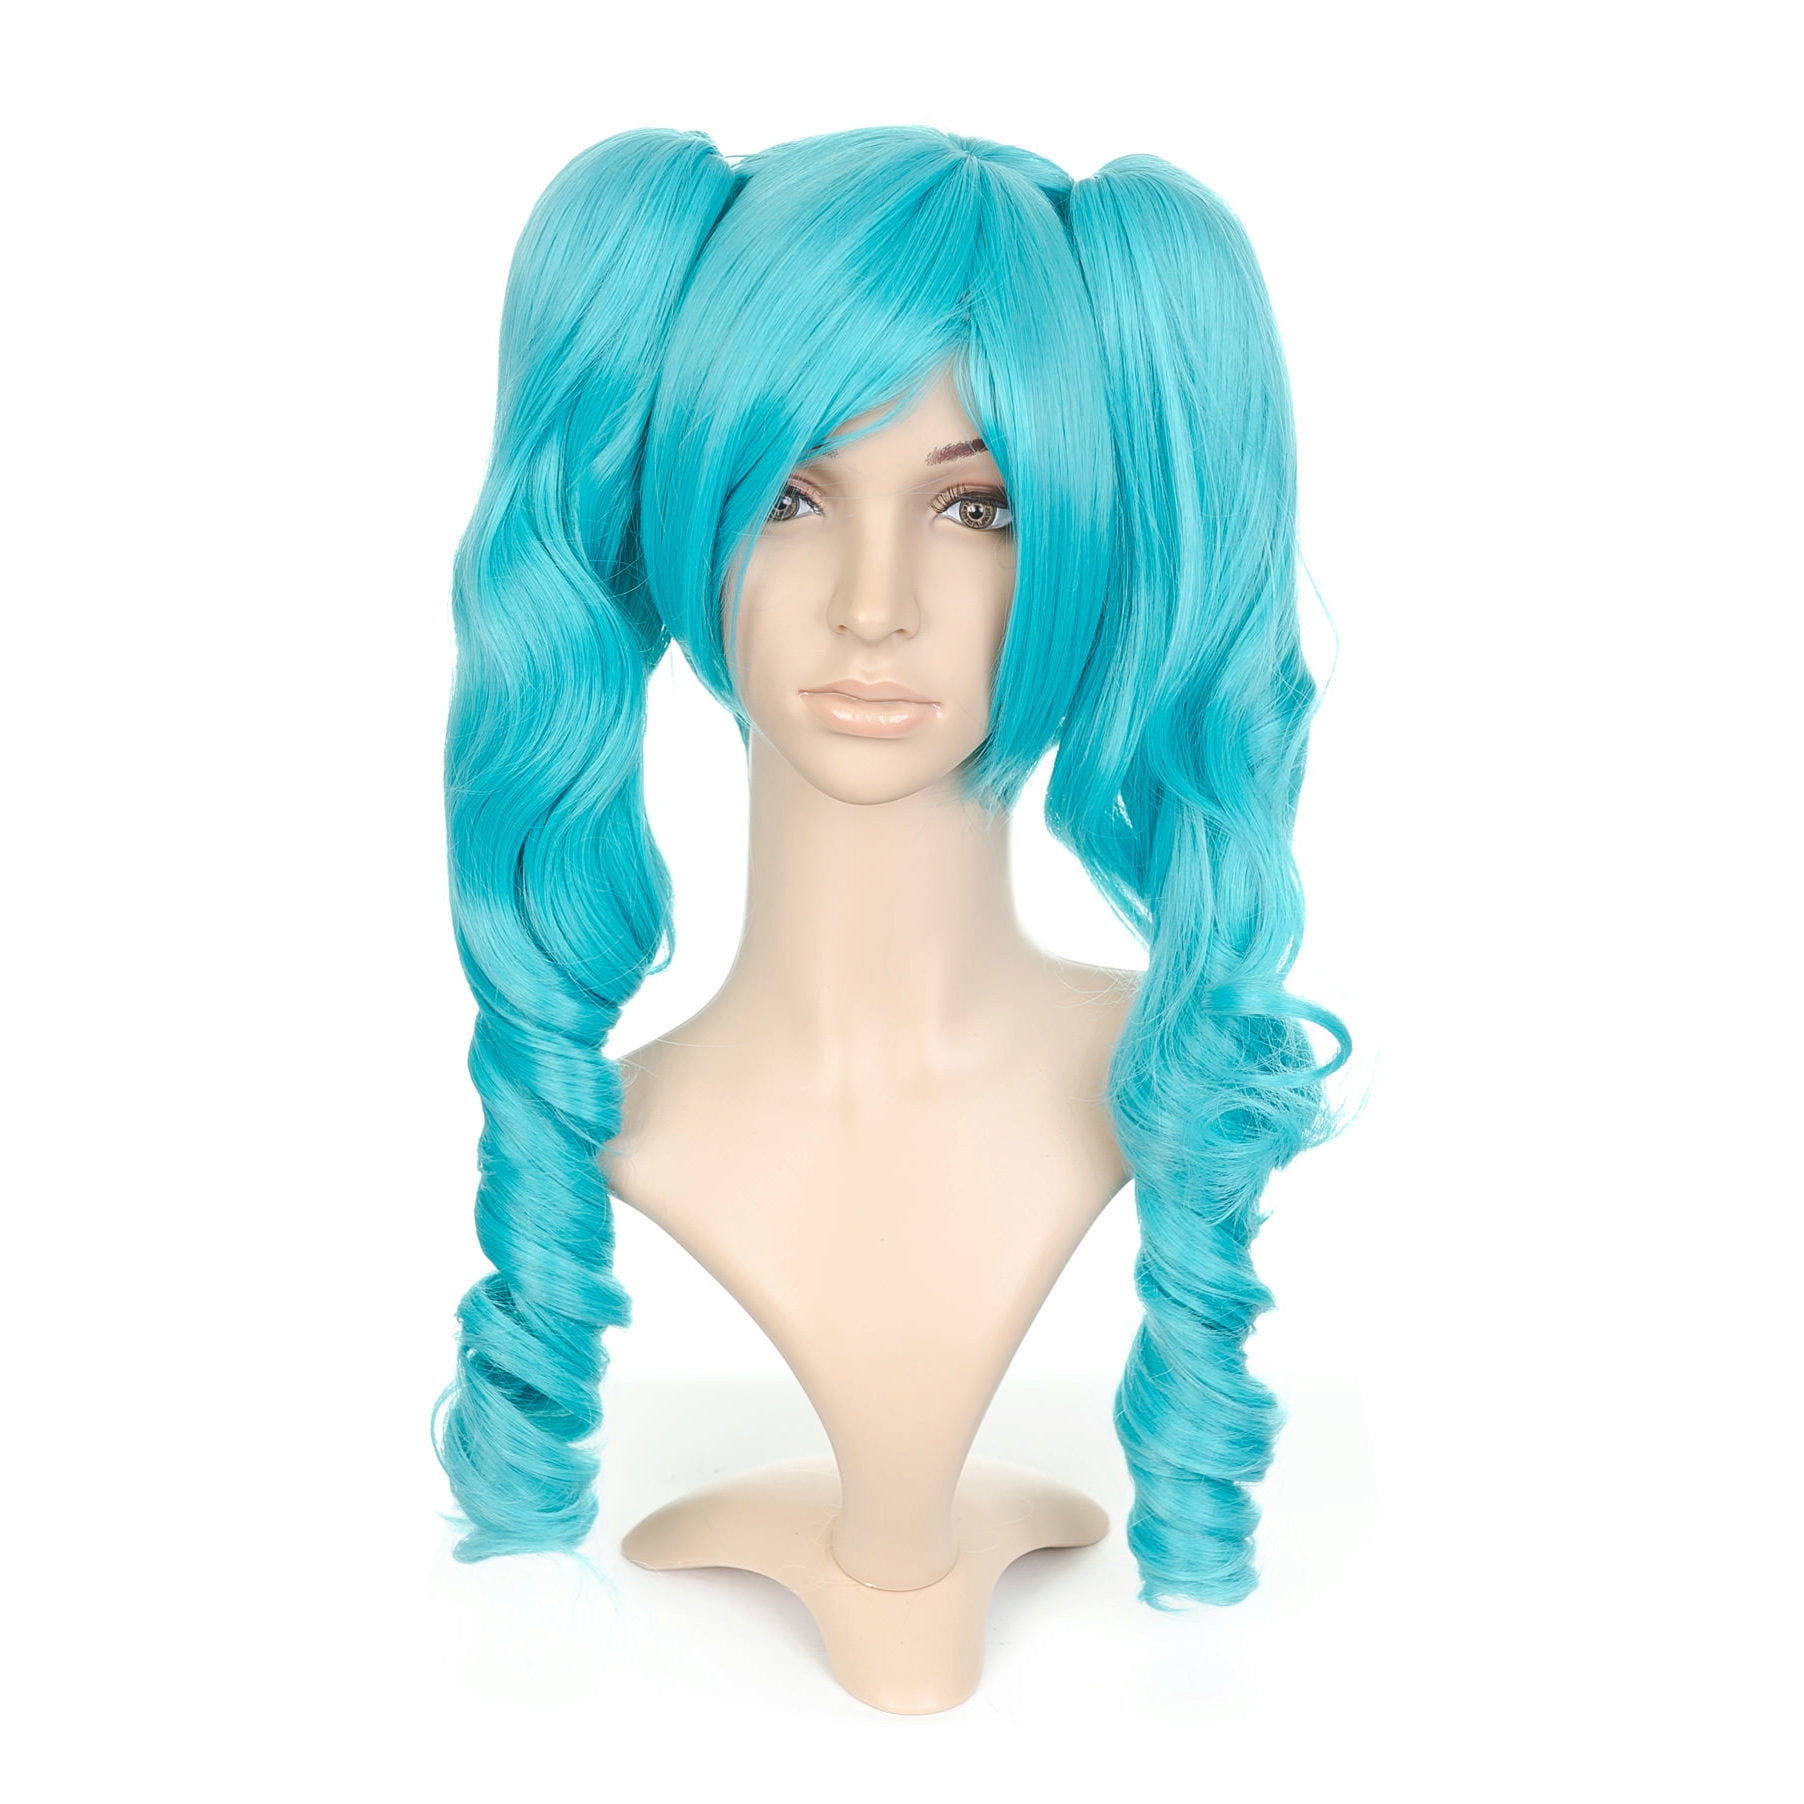 Aqua Blue Anime Cosplay Costume Wig w/ Curly Pigtails - Walmart.com ...